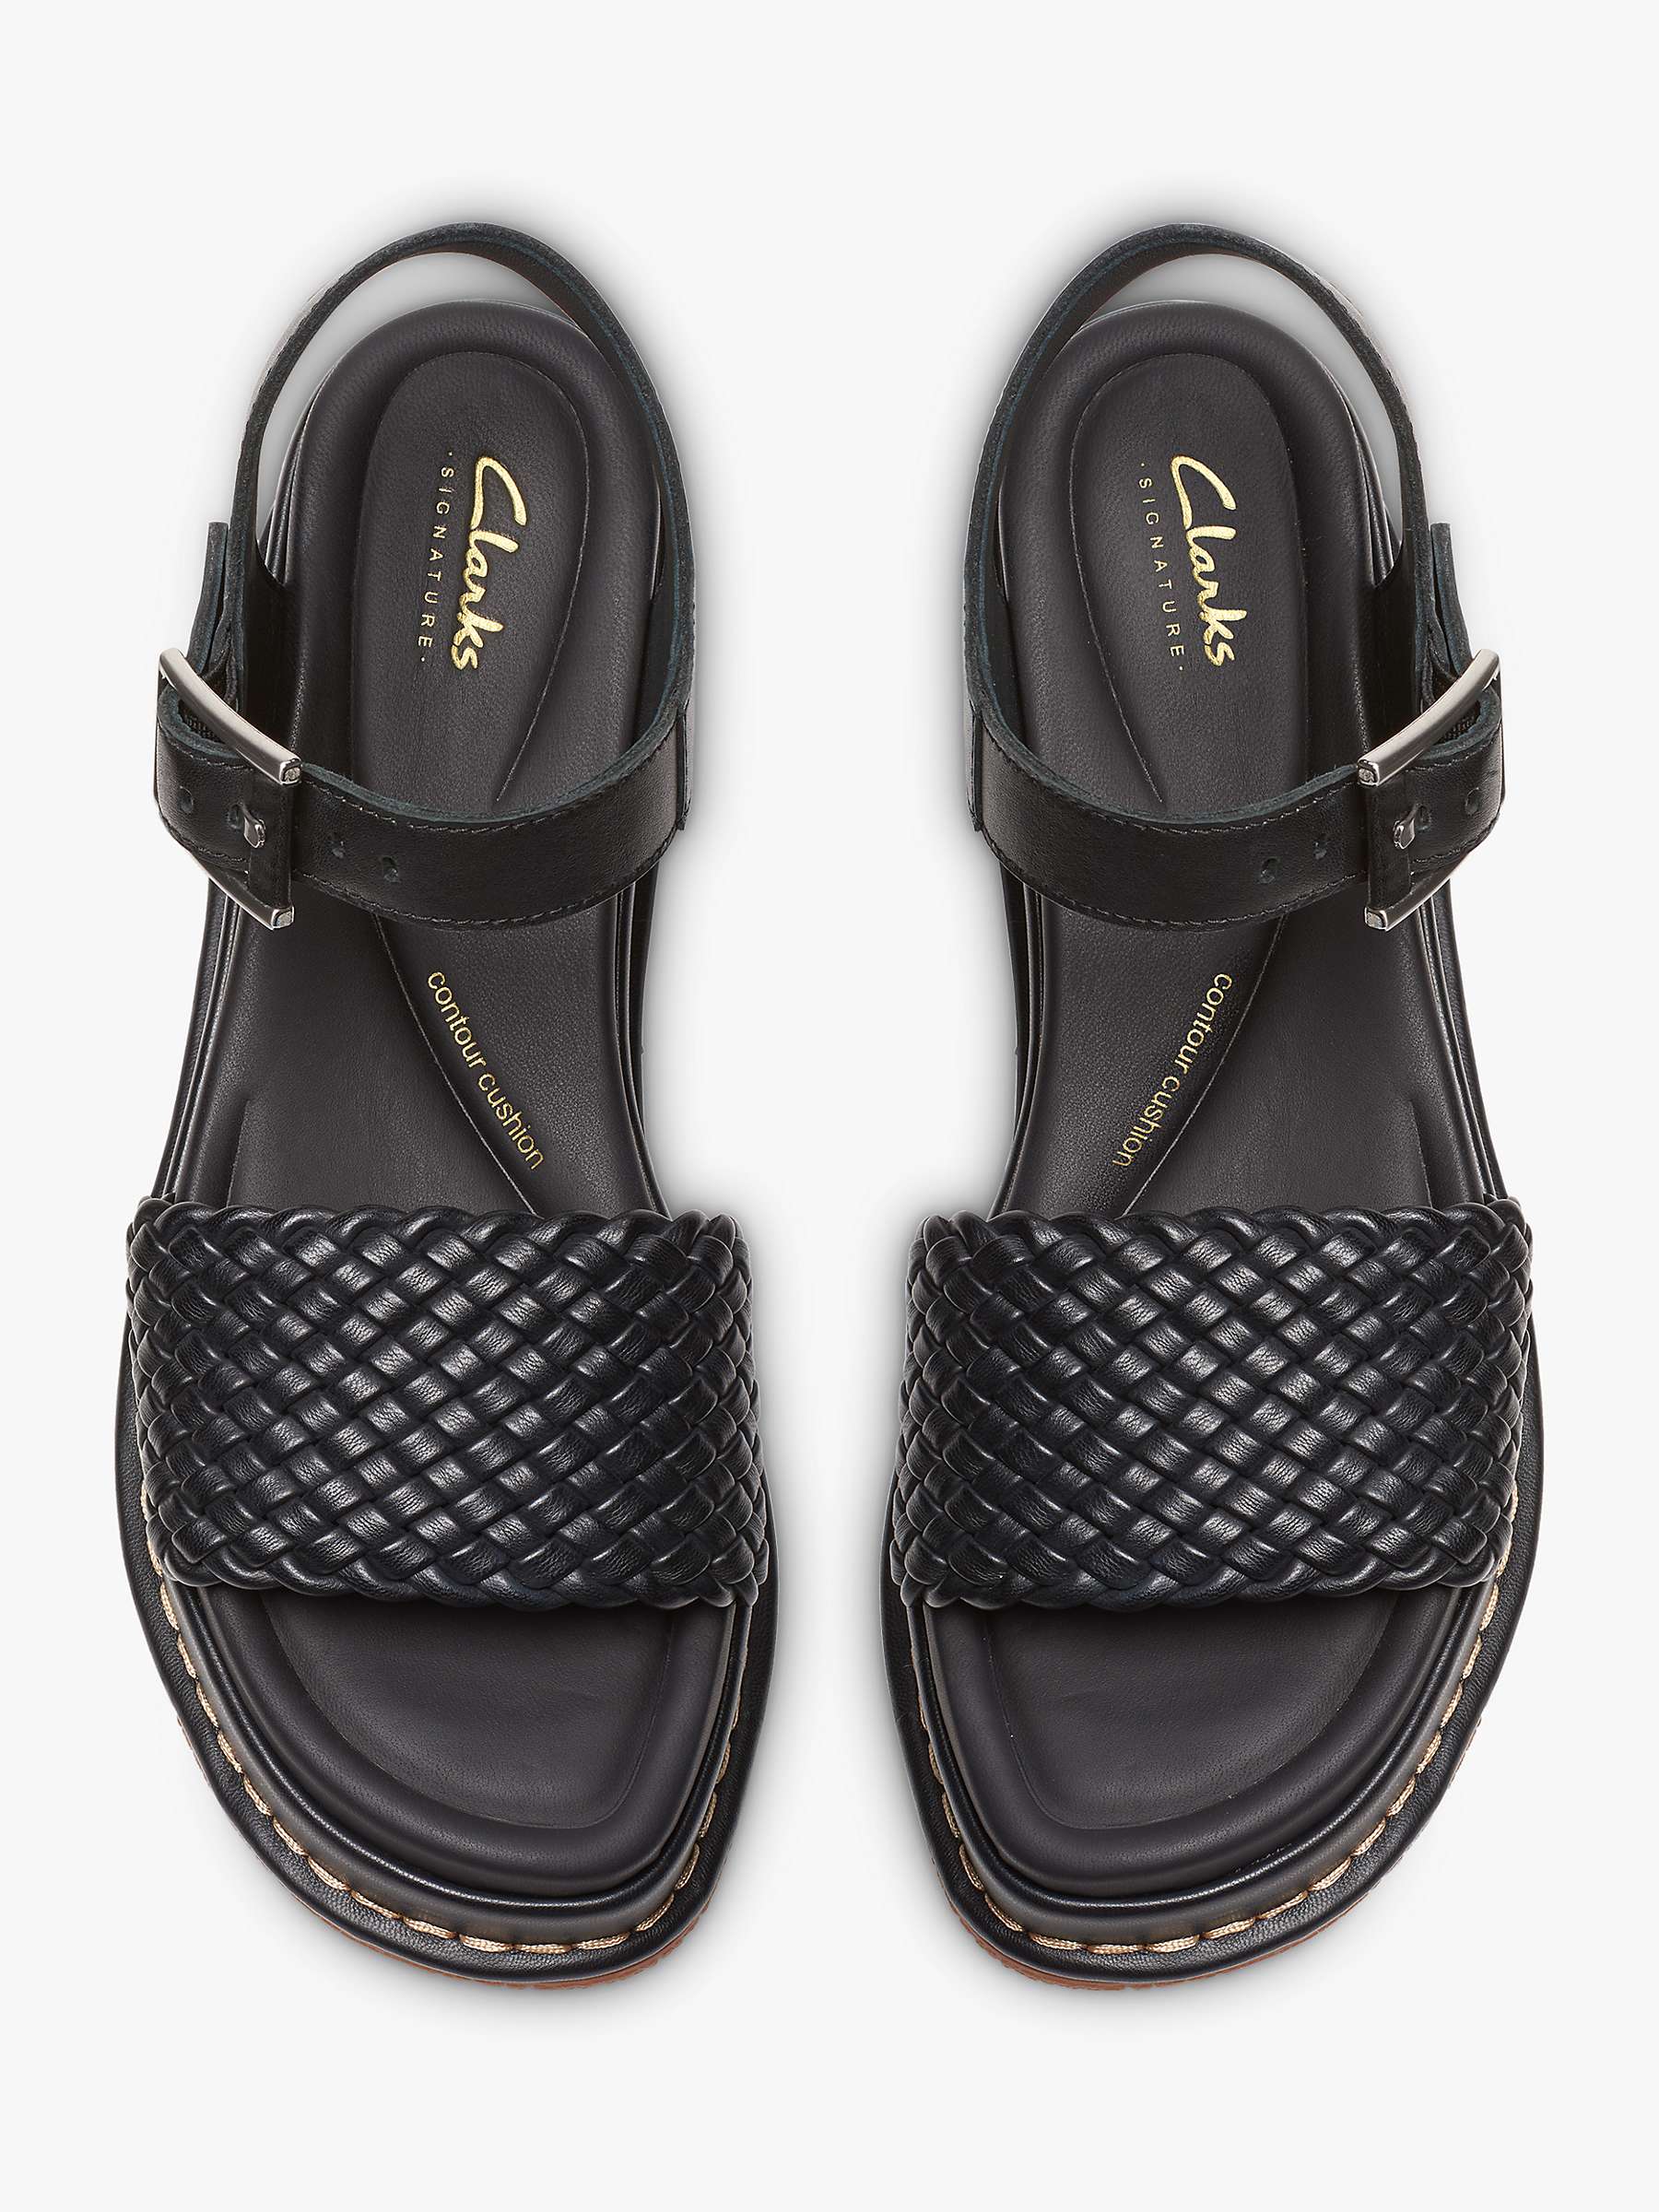 Buy Clarks Kimmei Bay Wedge Sandals Online at johnlewis.com